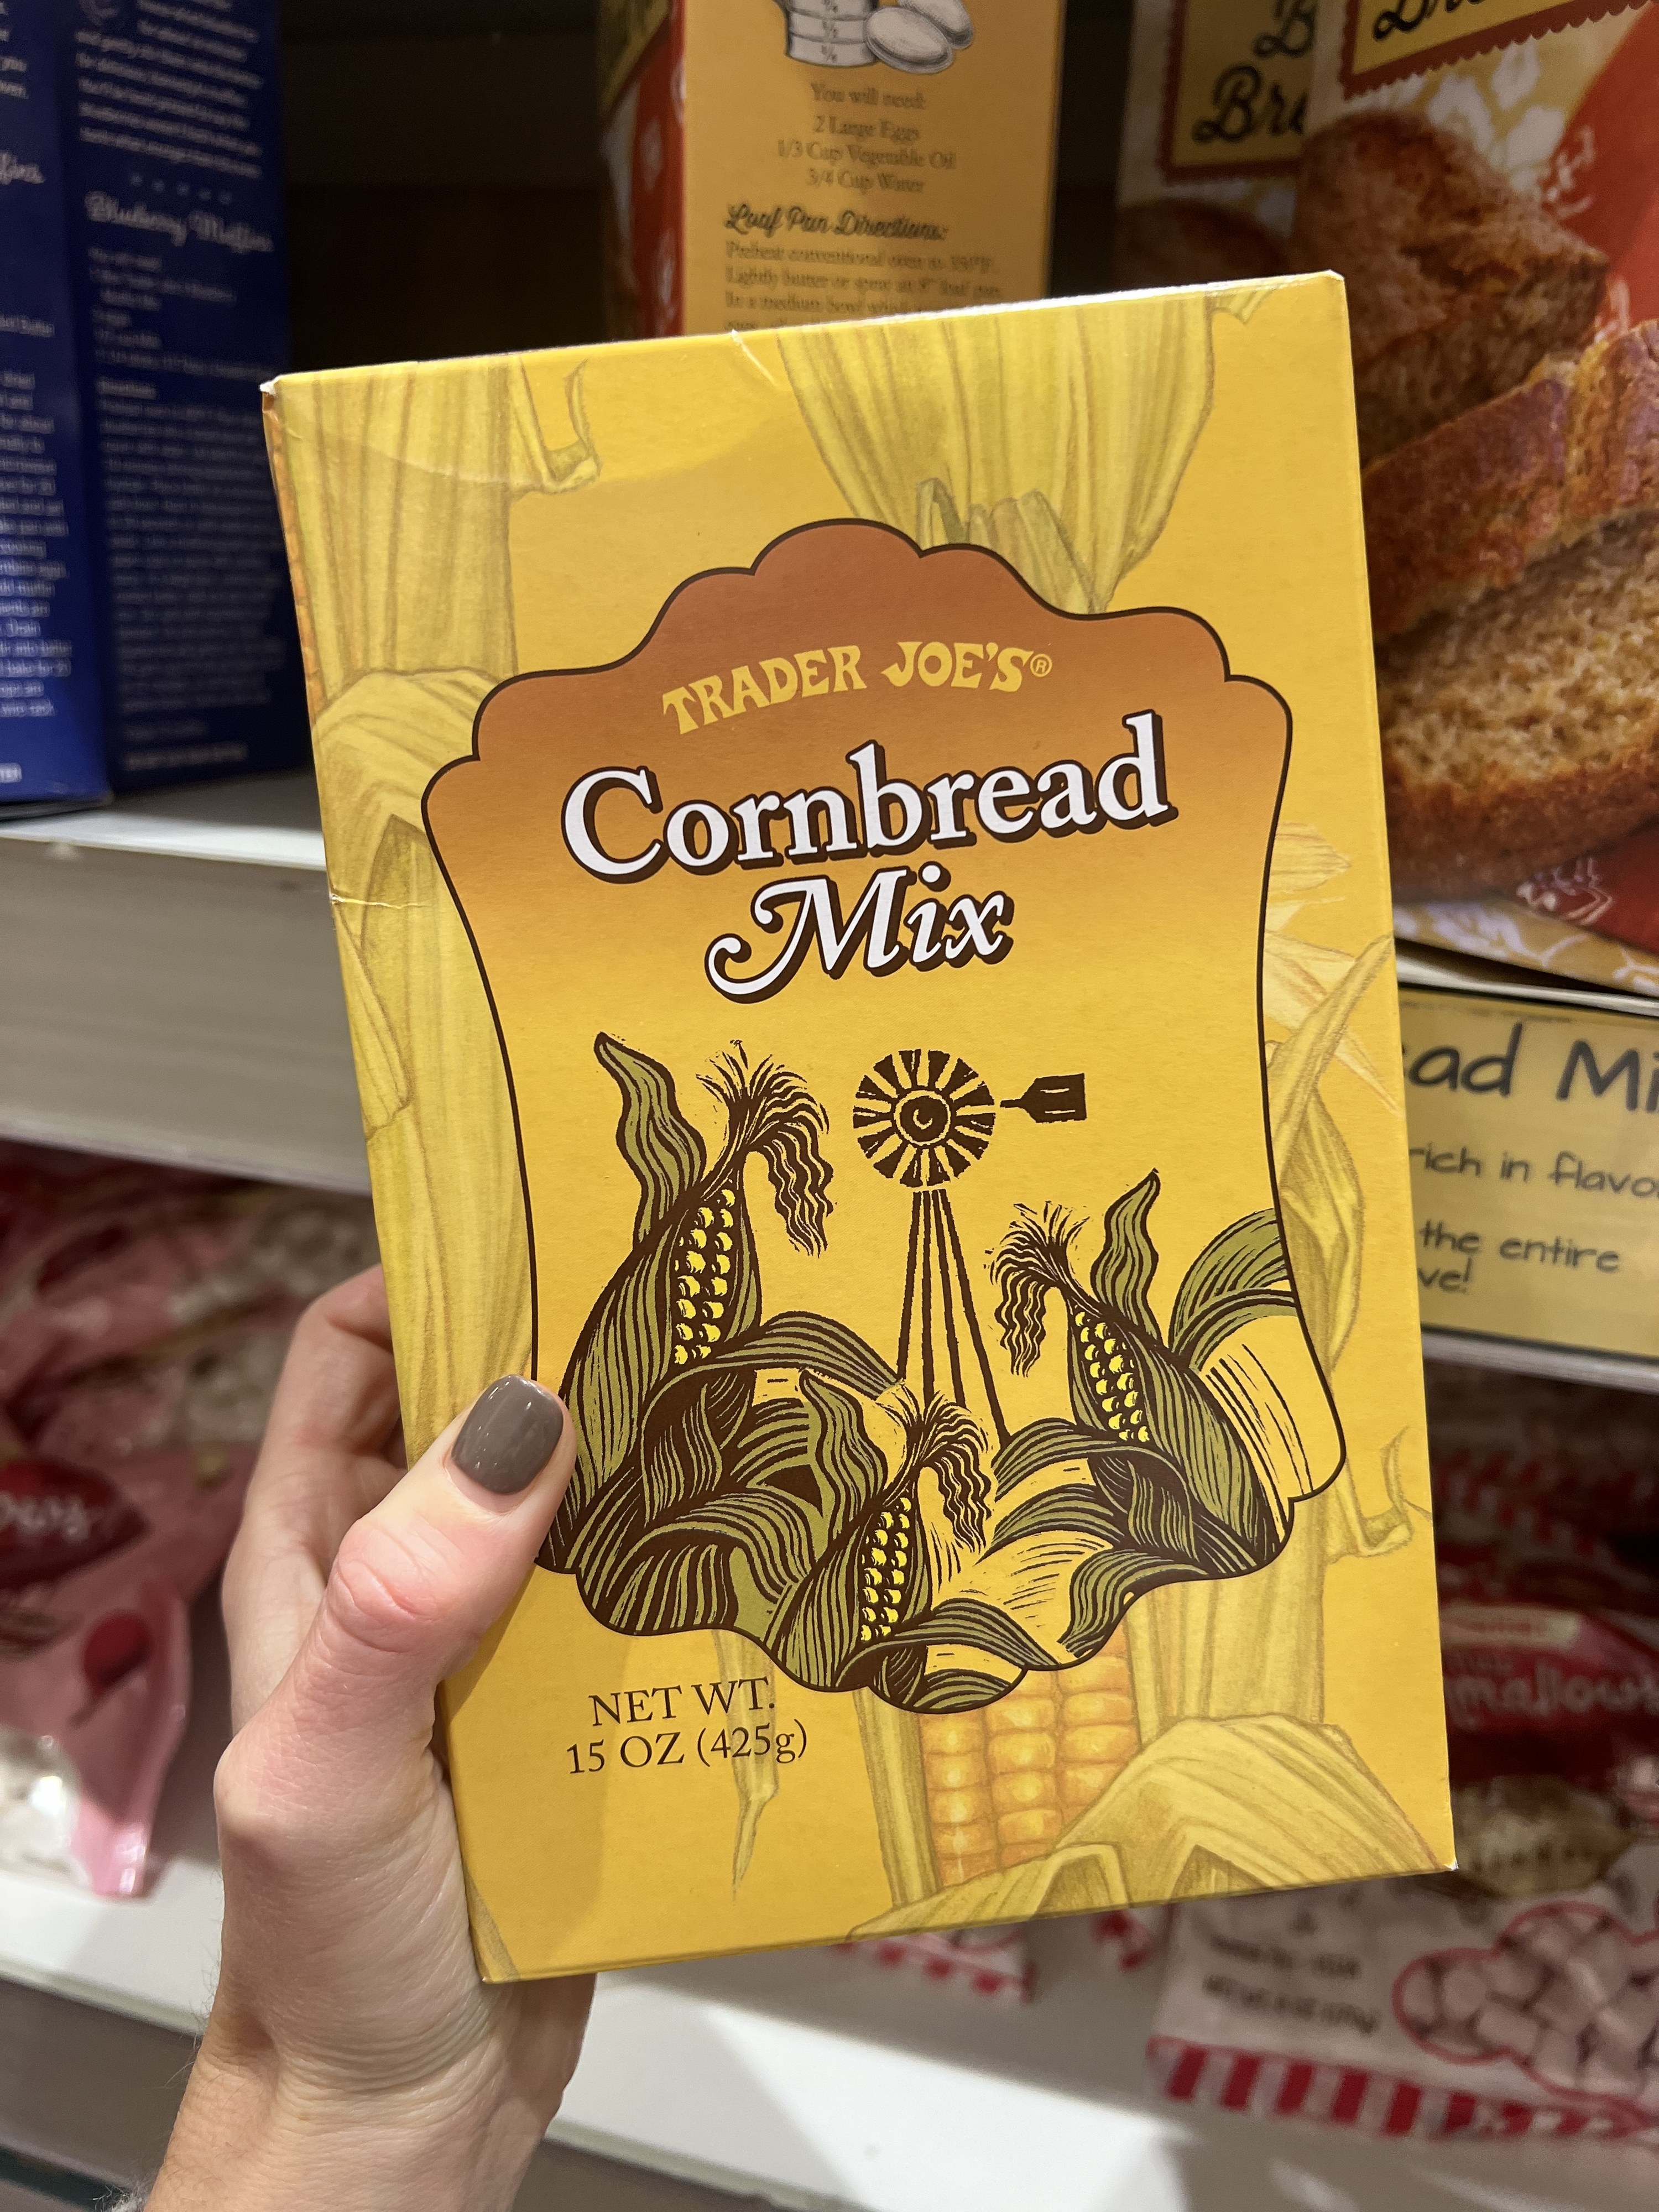 A box of Cornbread Mix